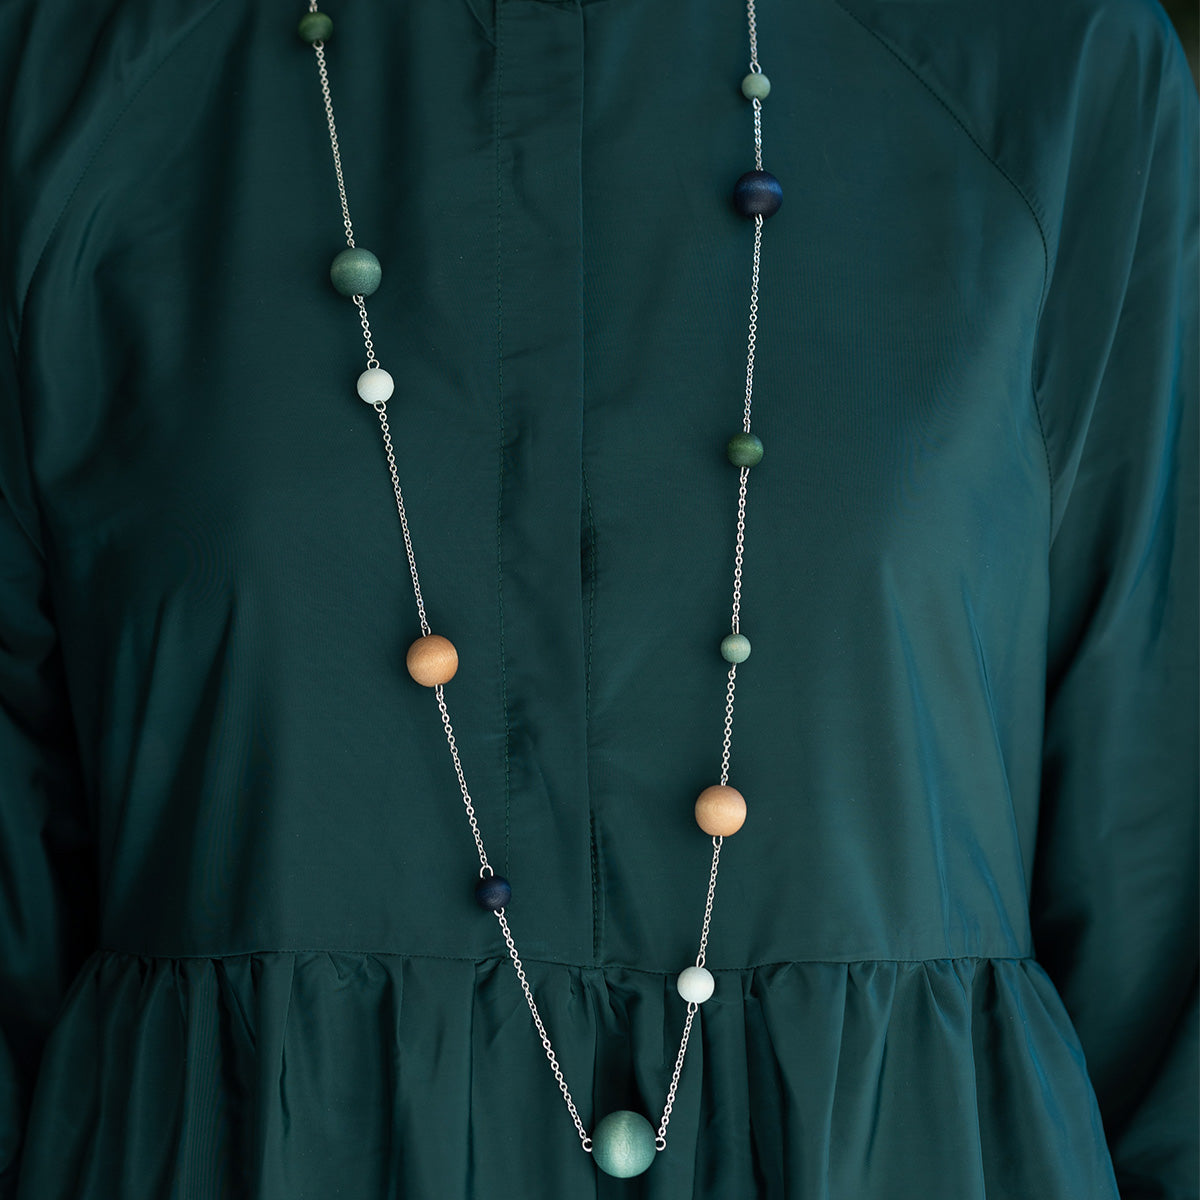 Värikimara pendant, shades of green